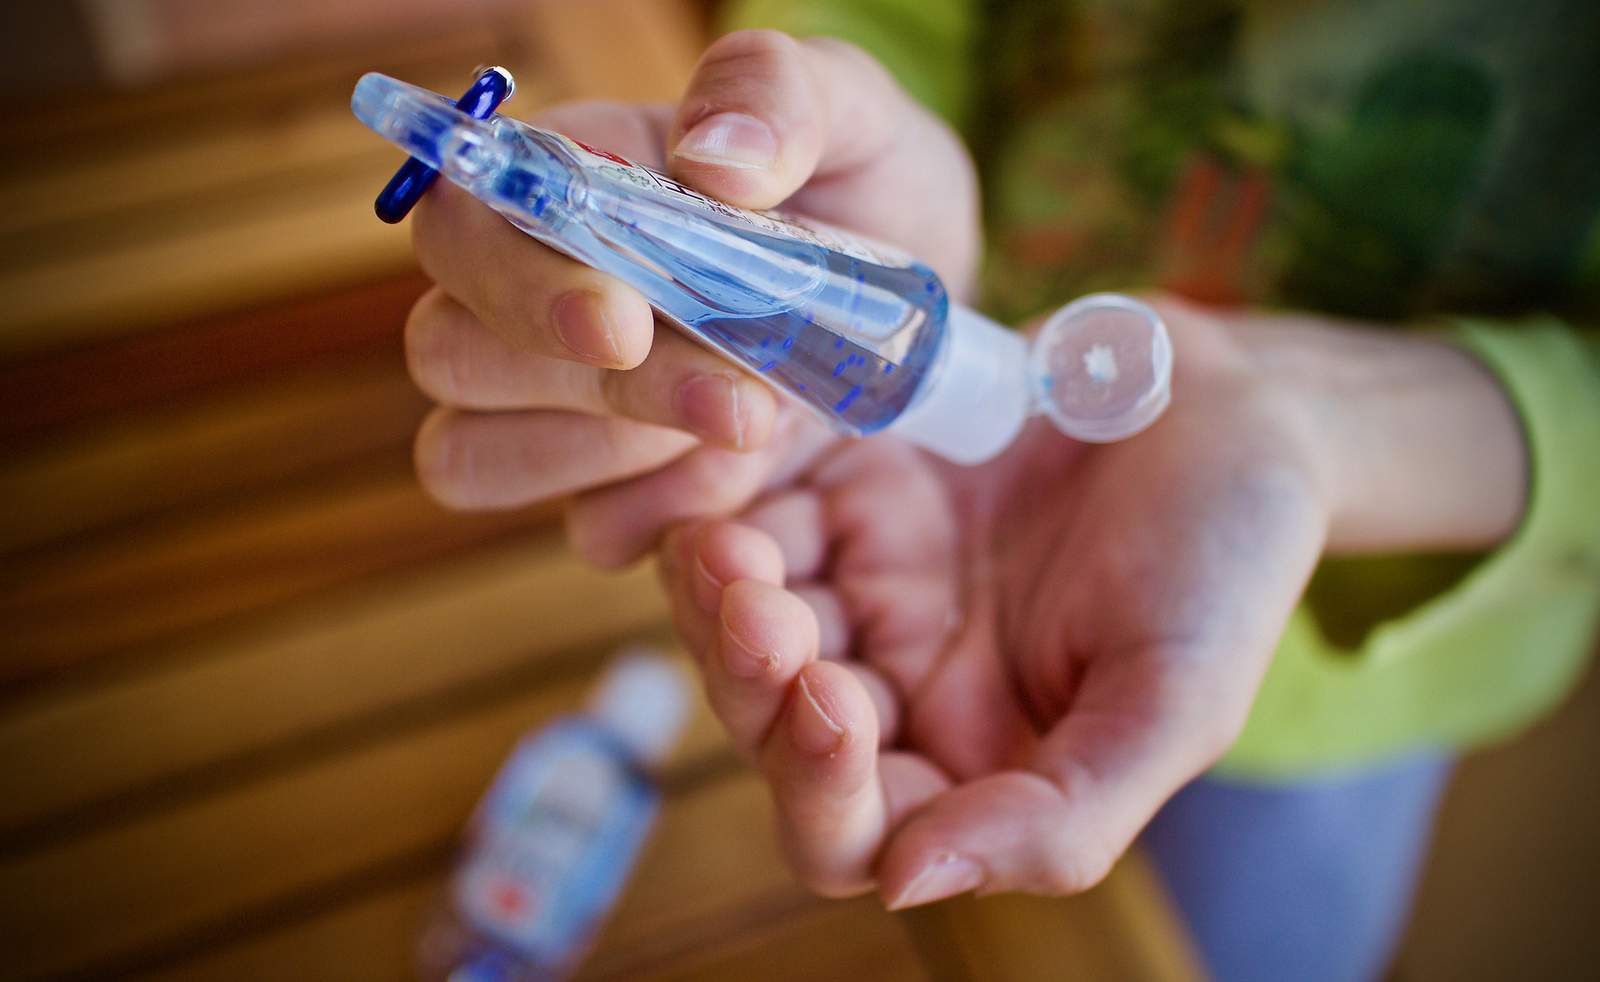 FDA recalls 212 ’unsafe’ hand sanitizer products